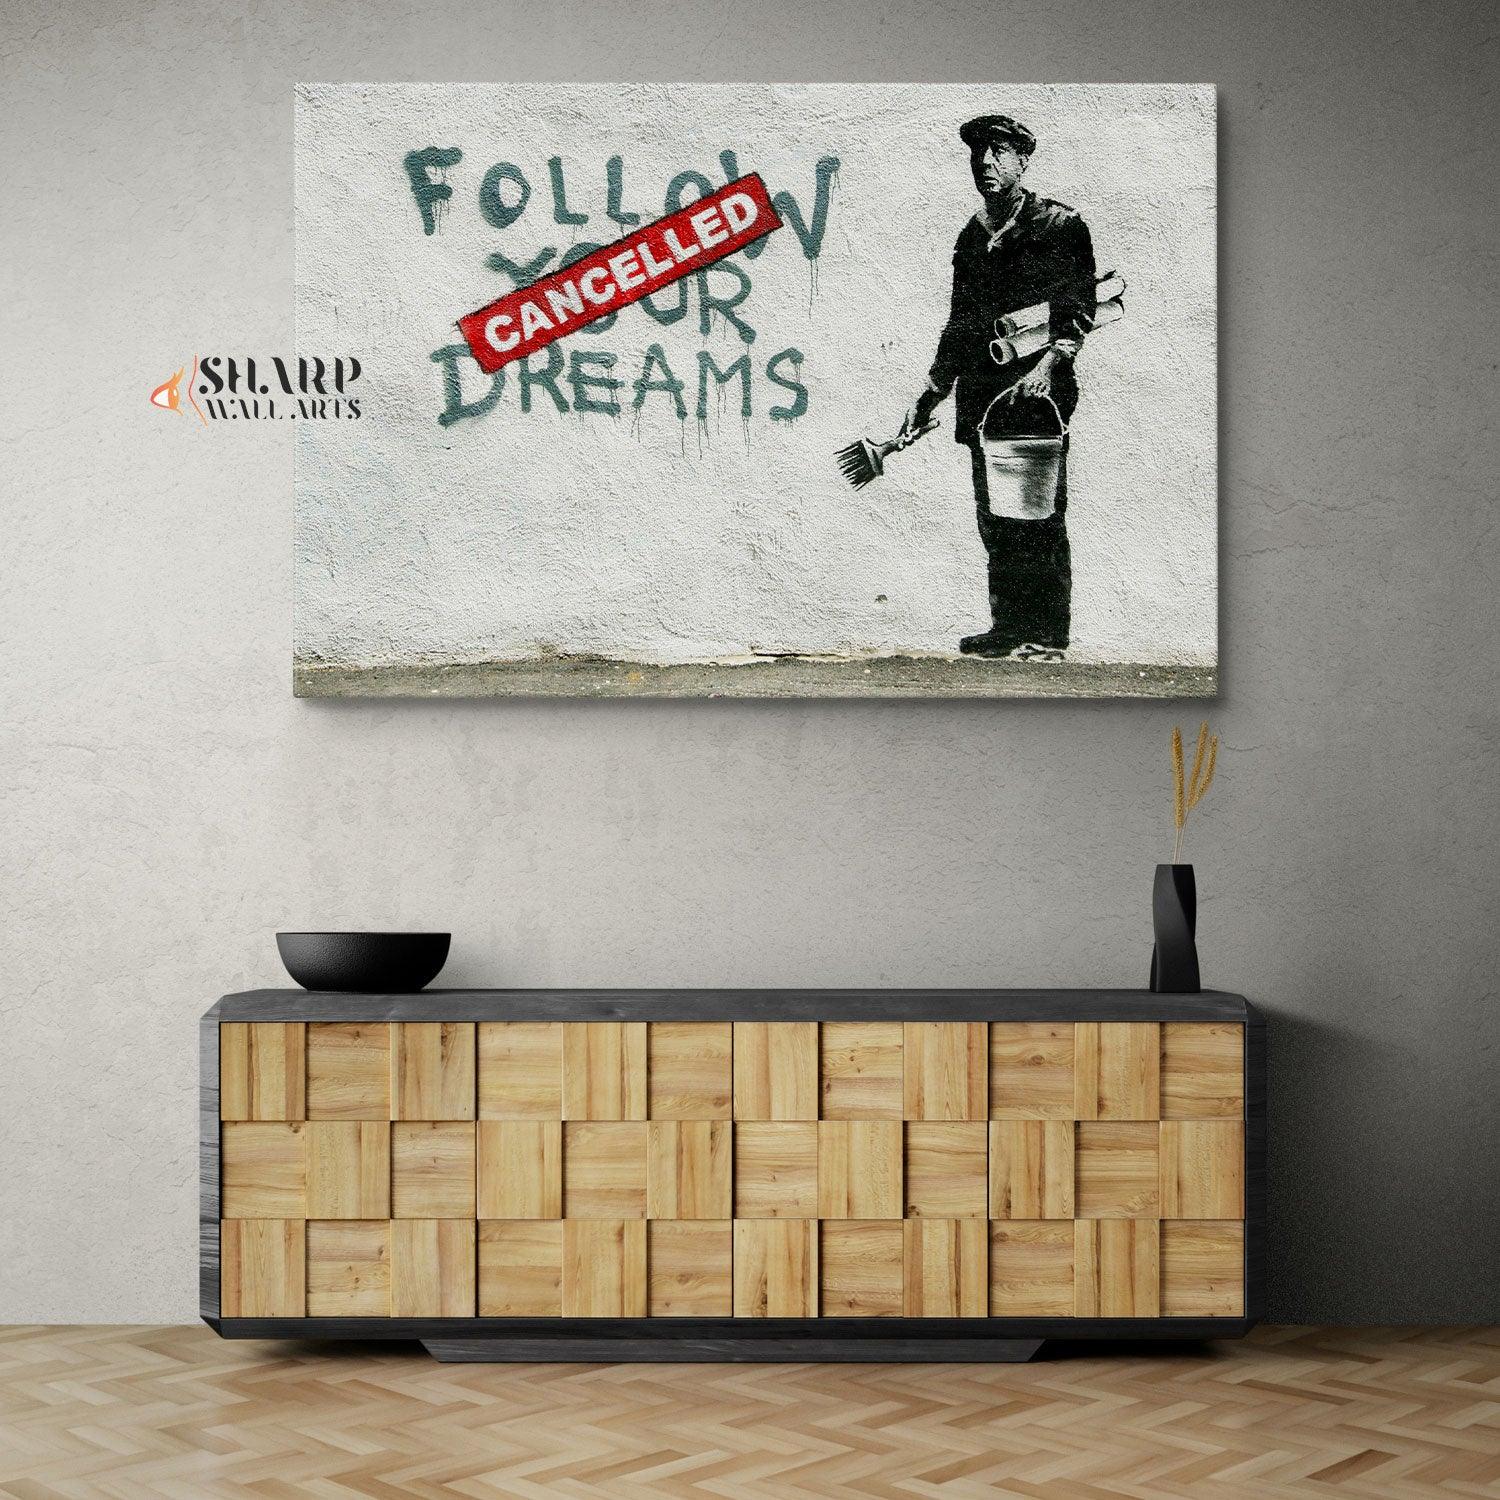 Banksy - Follow Your Dreams Wall Art Canvas - SharpWallArts